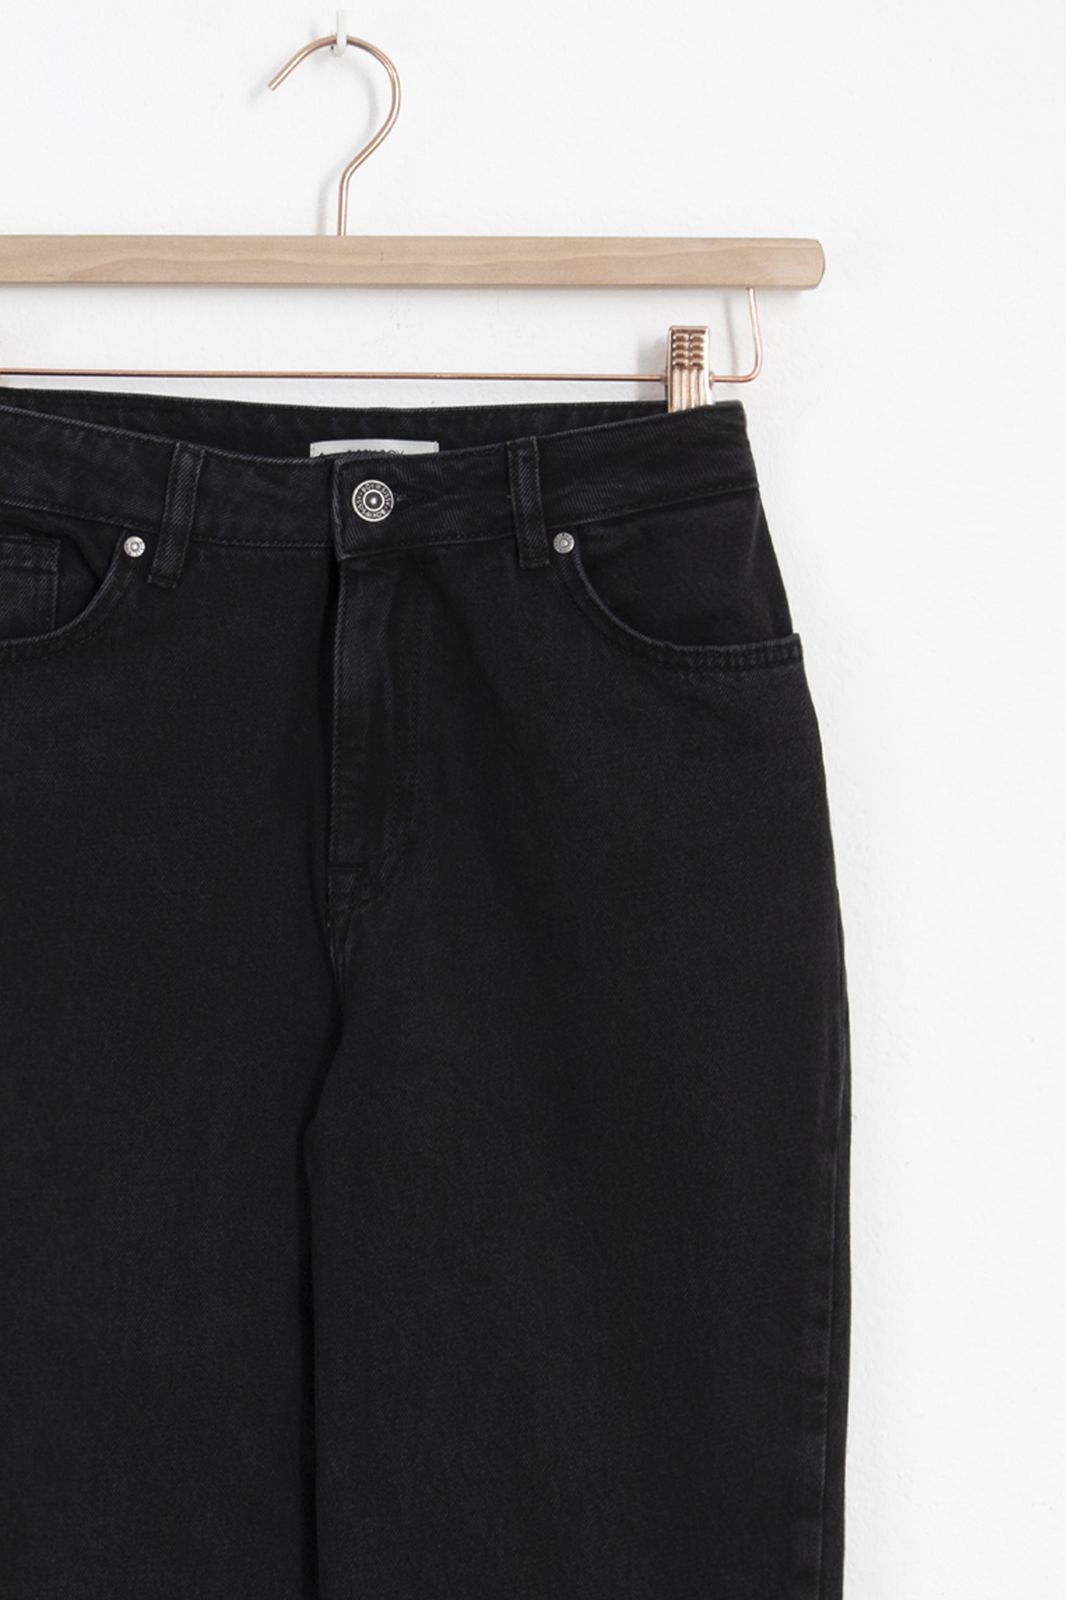 Beira black high waist cropped jeans